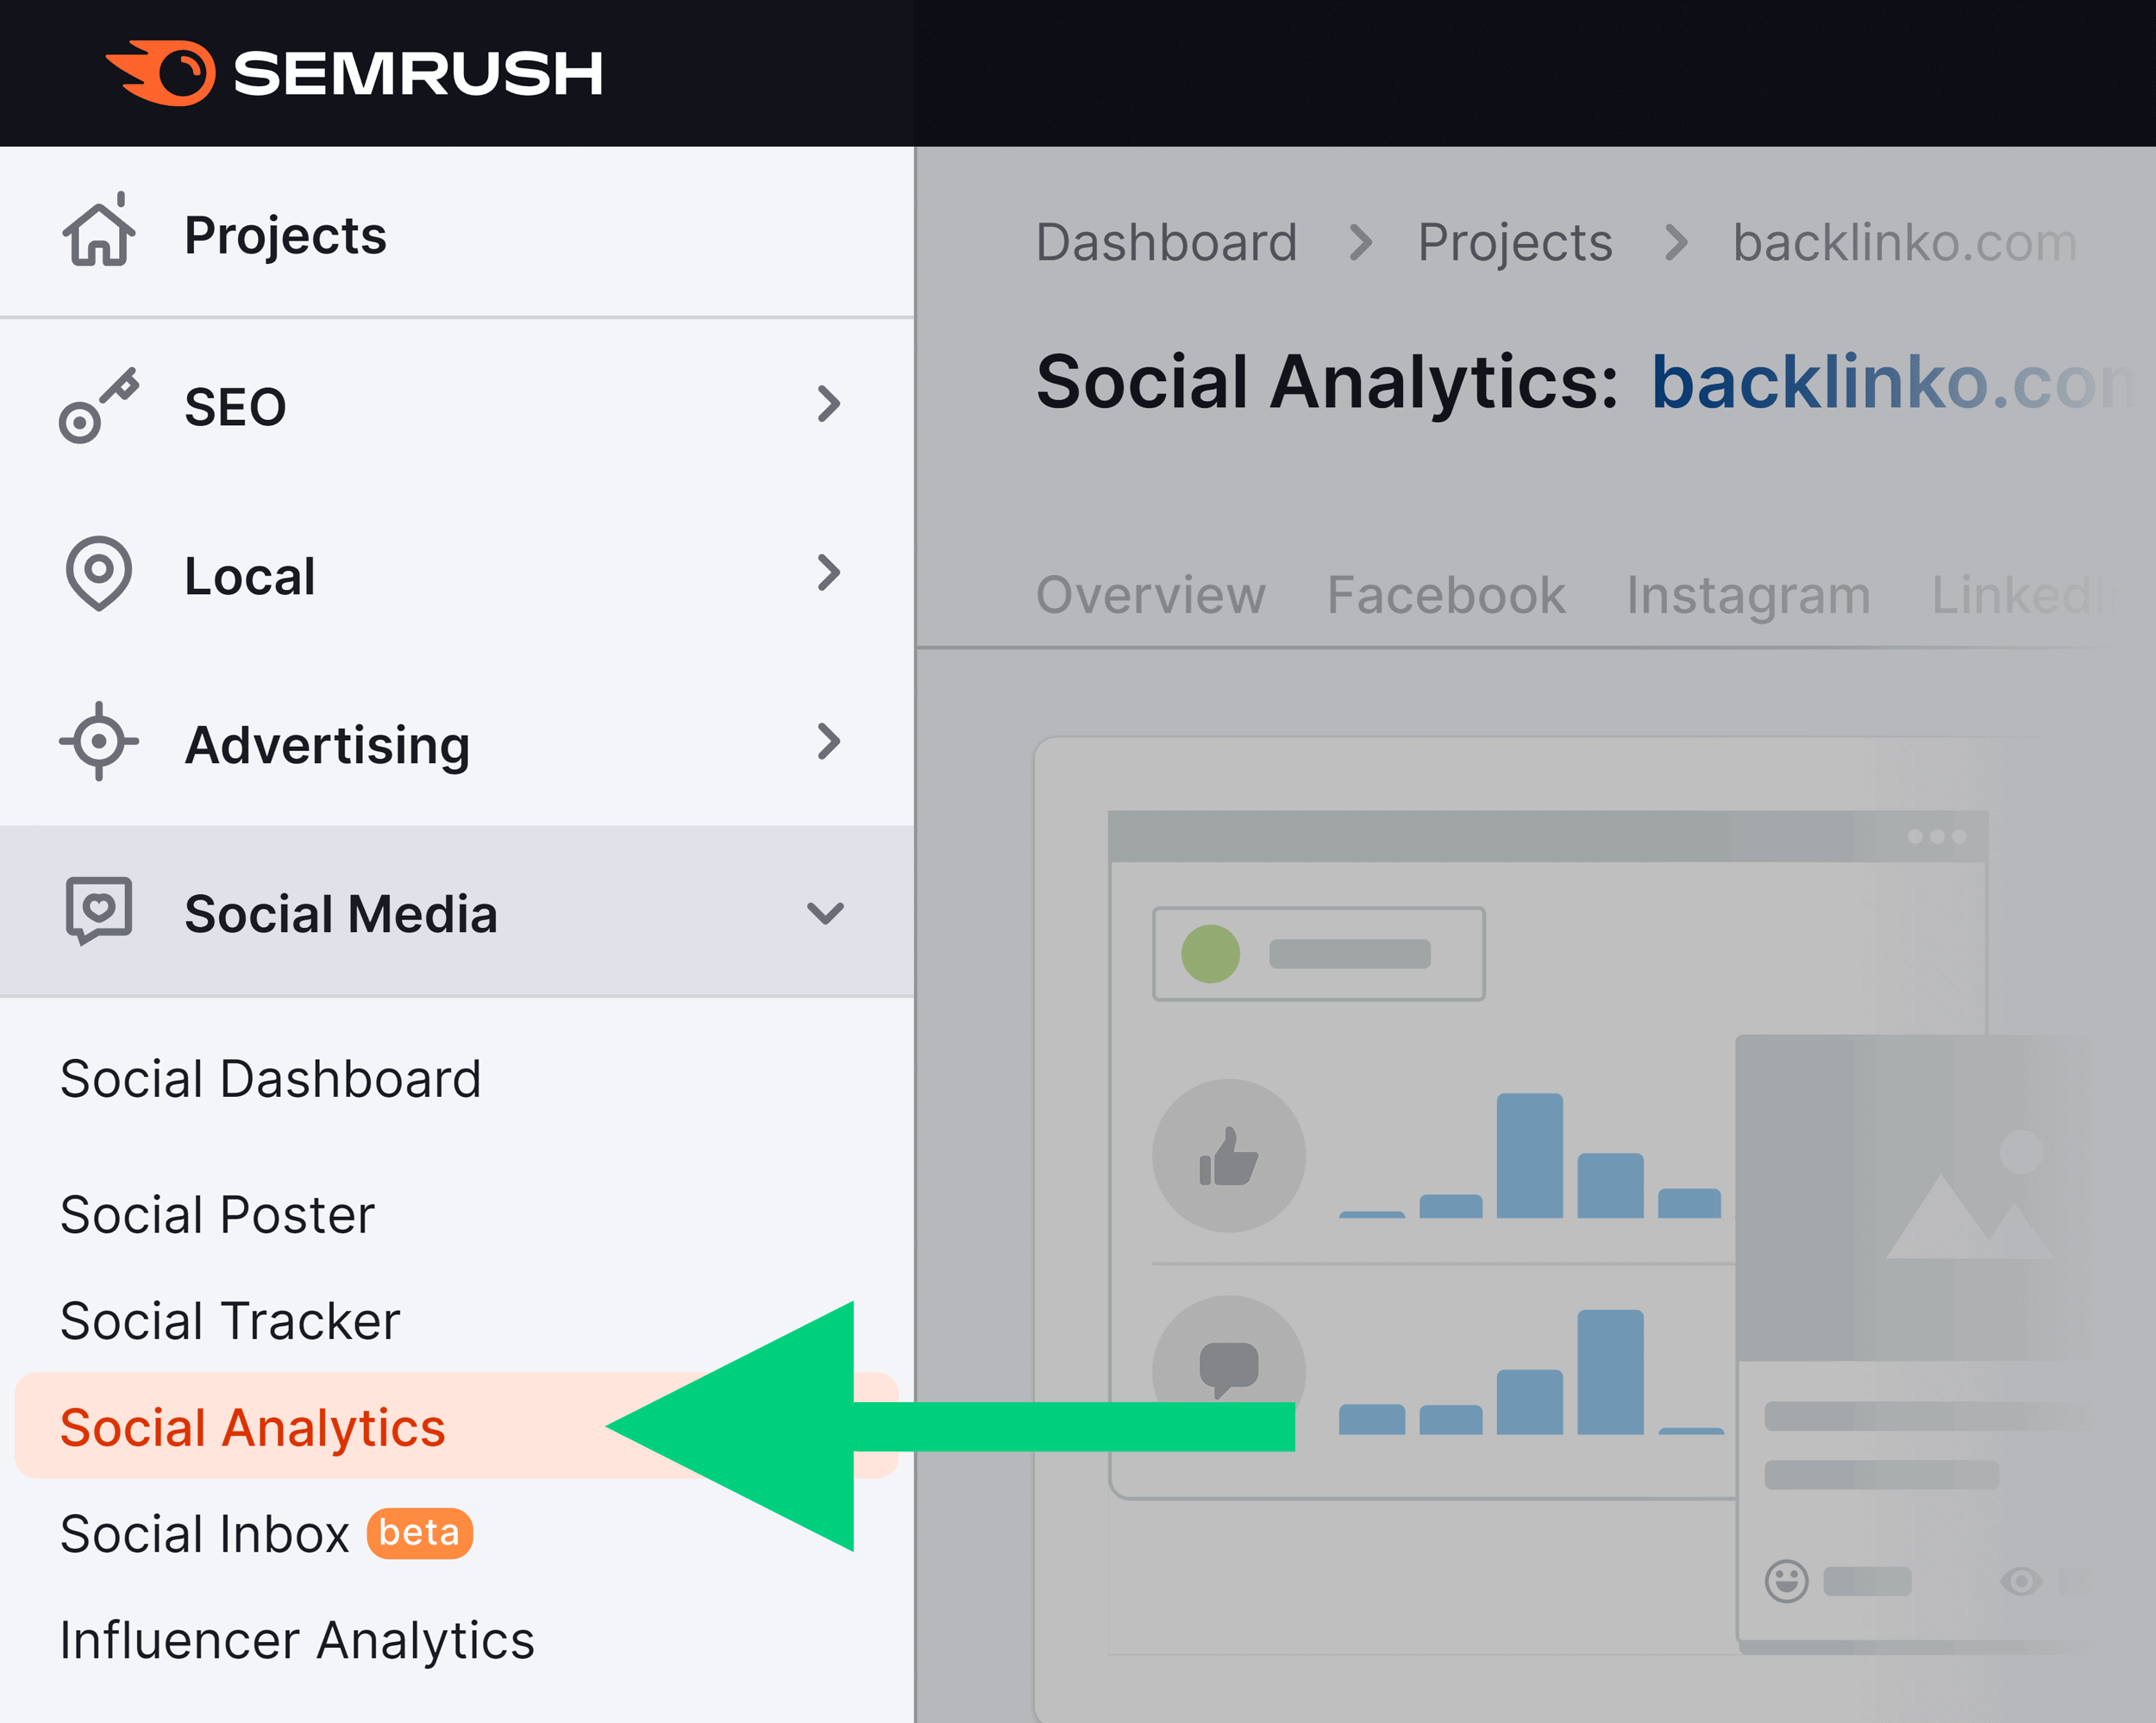 Semrush – Social Analytics